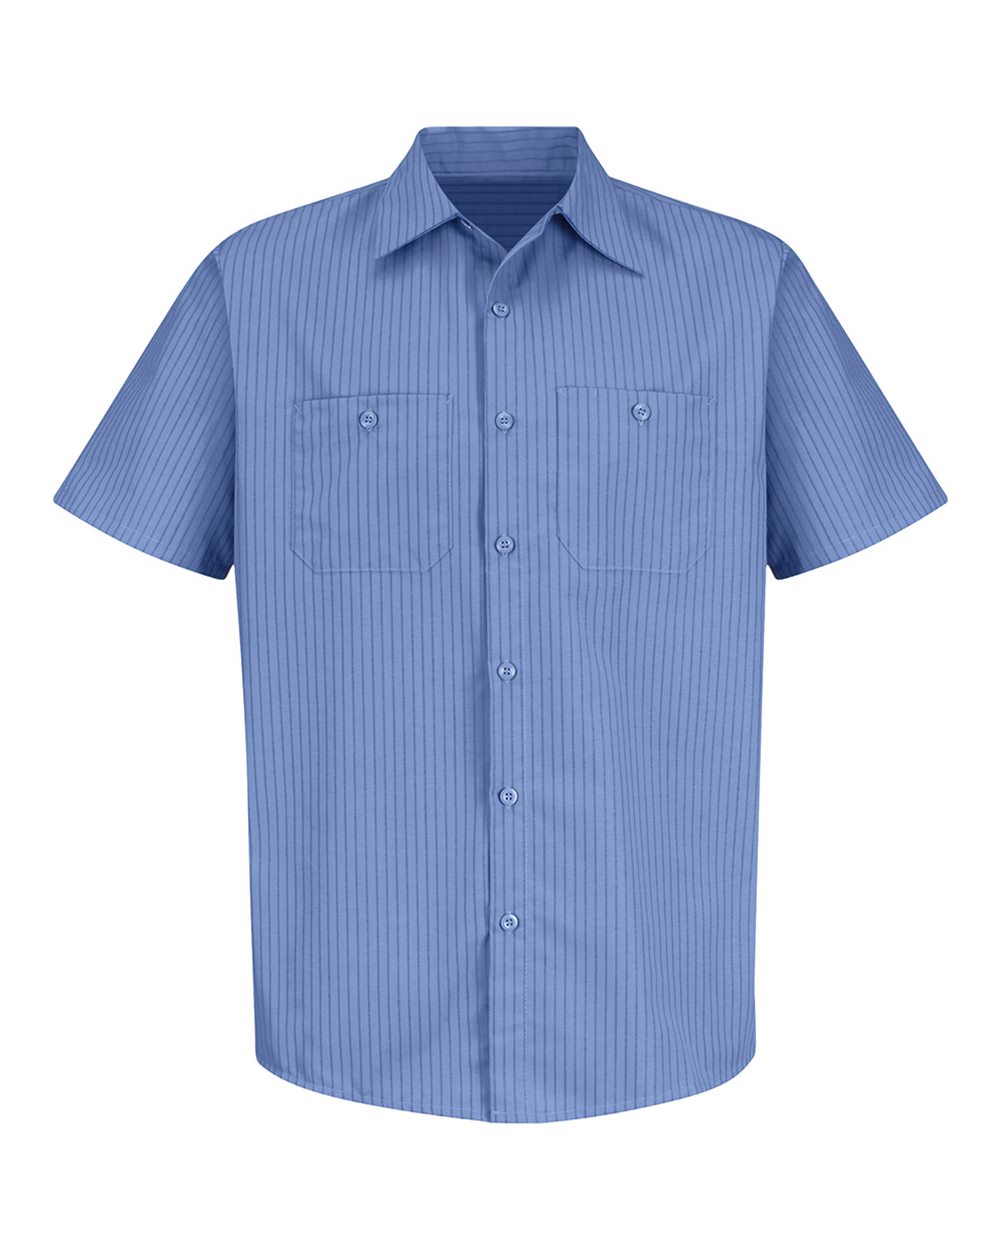 40630 Industrial Stripe Short Sleeve Work Shirt - SB22